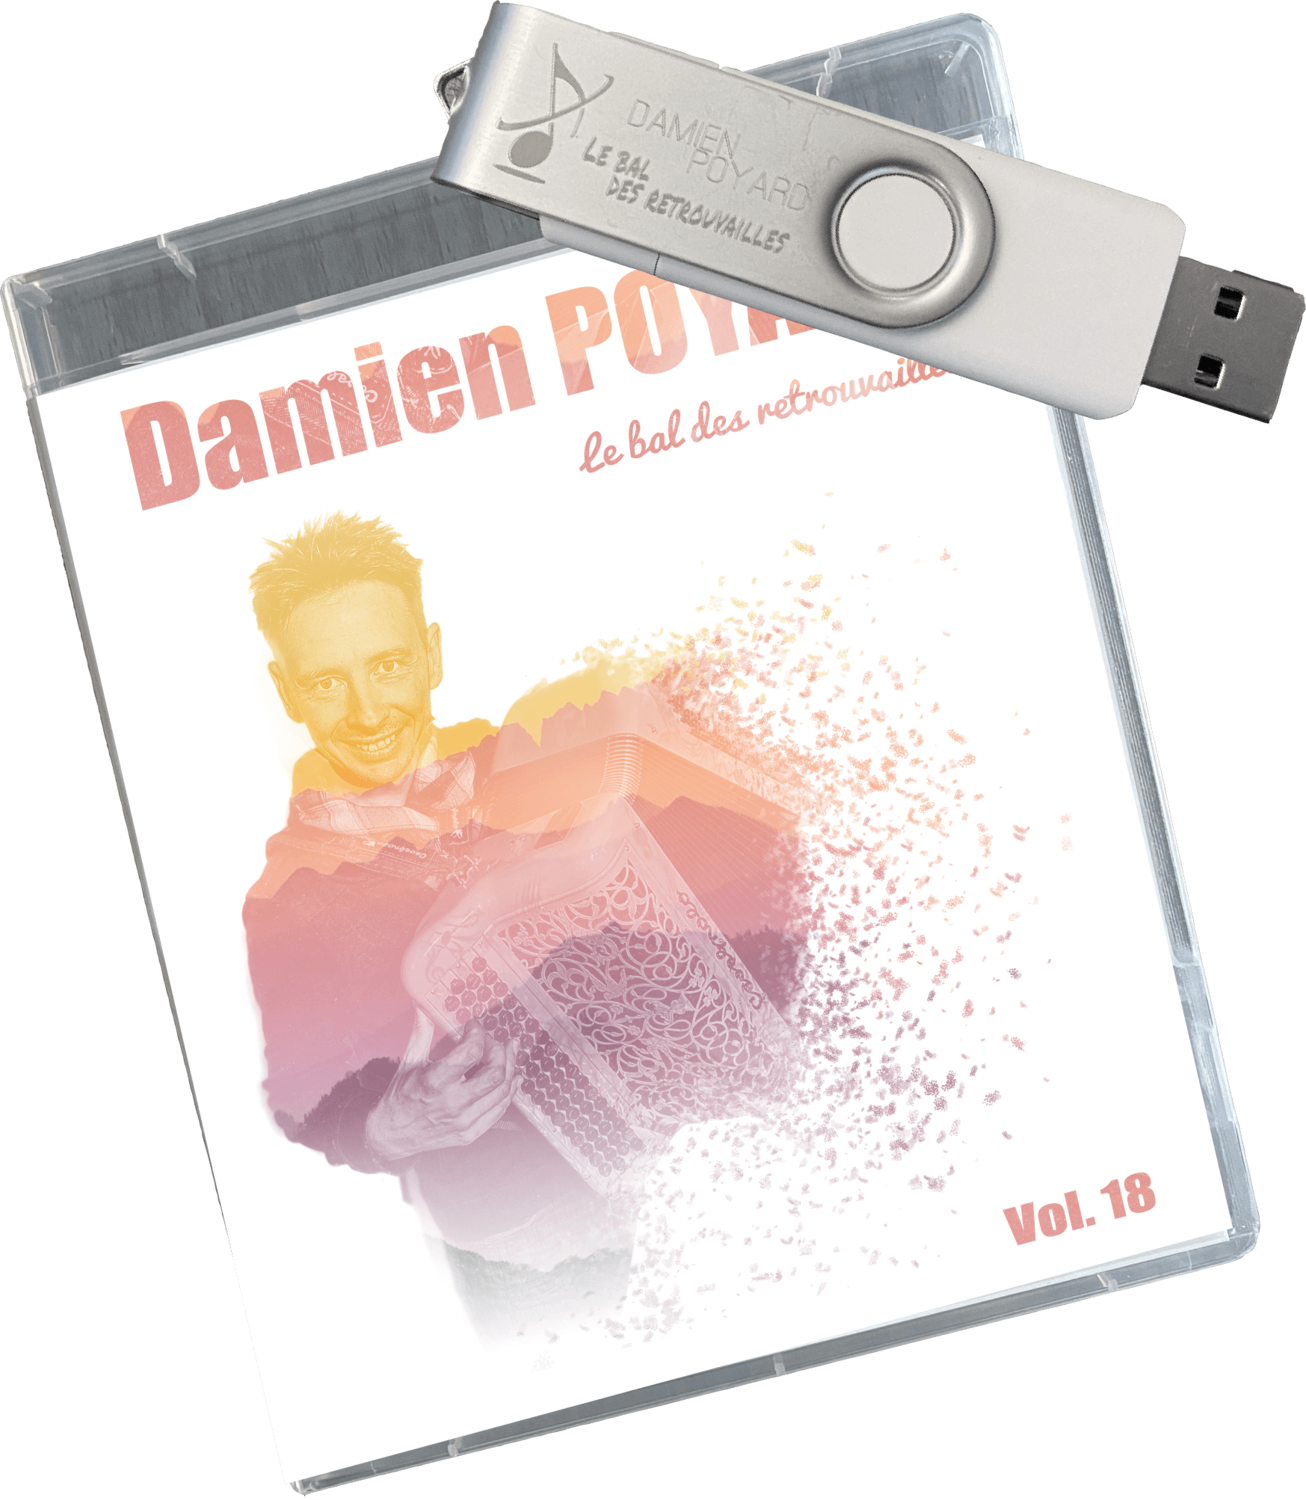 Damien POYARD (Cle USB N18)